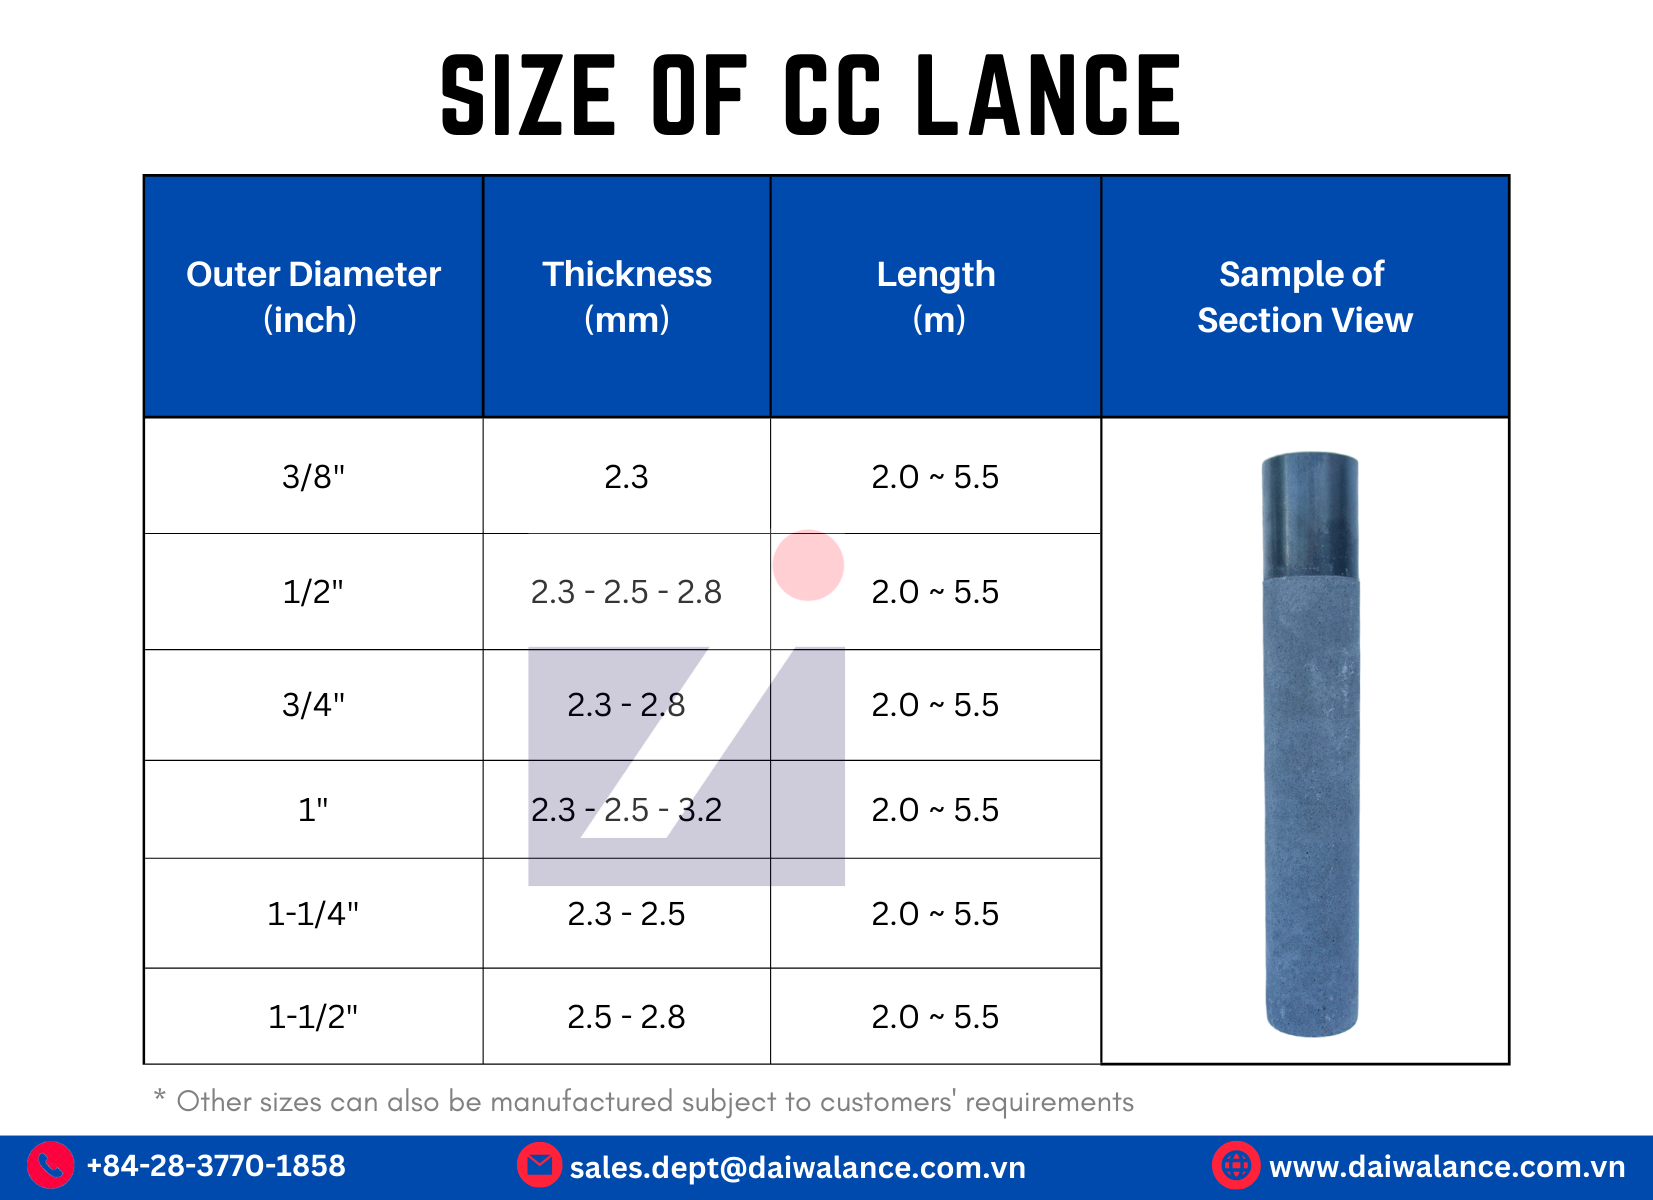 Size of CC Lance